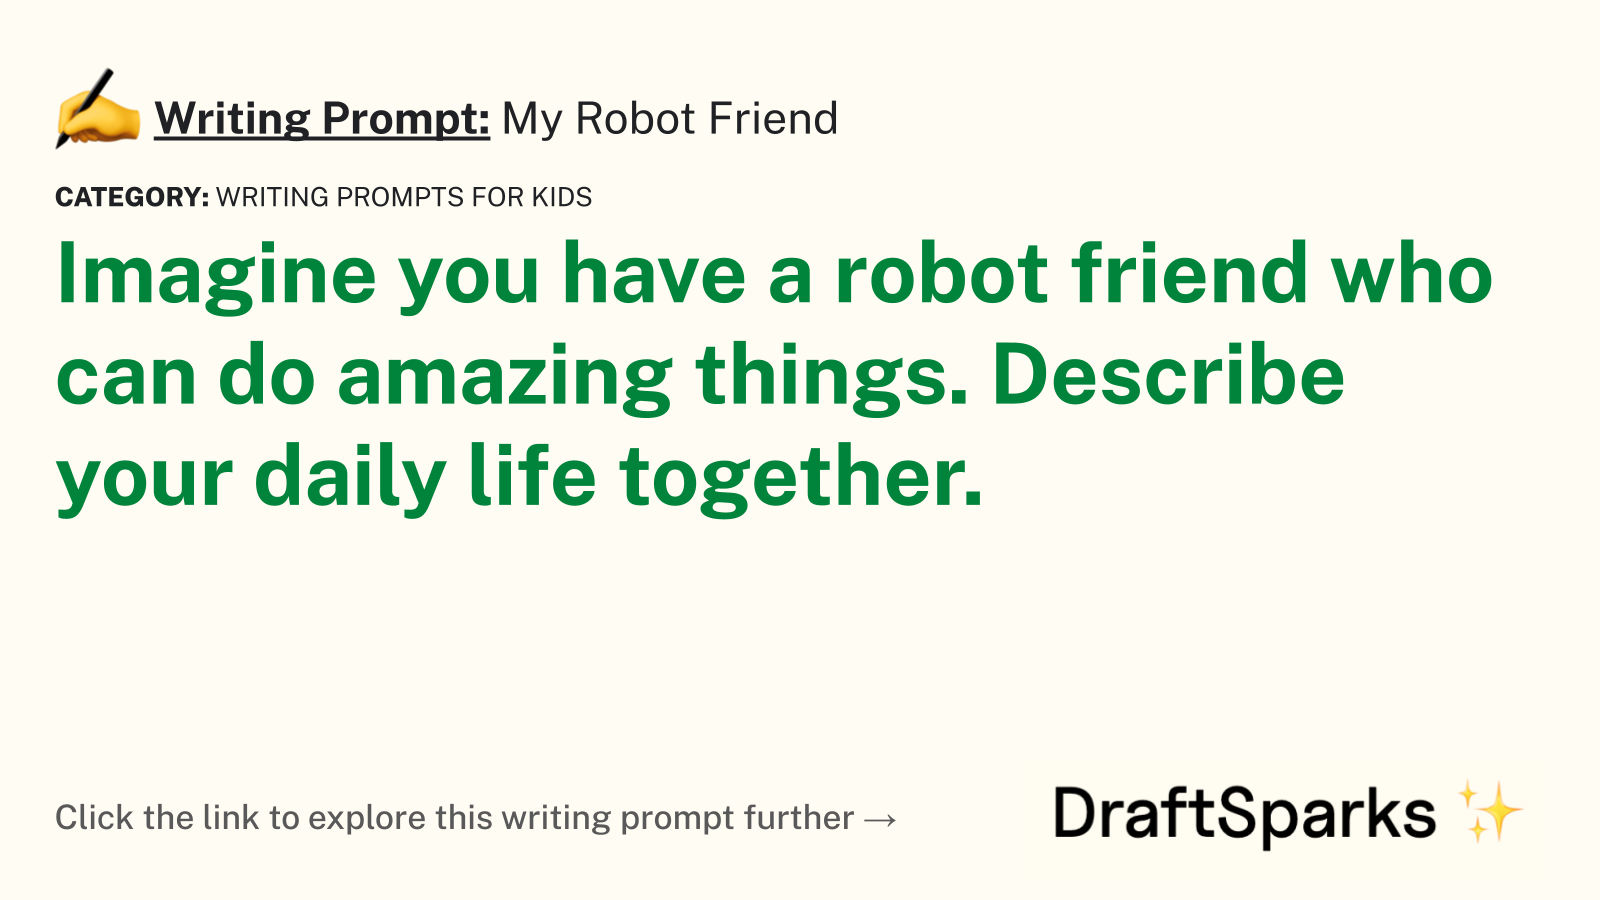 My Robot Friend